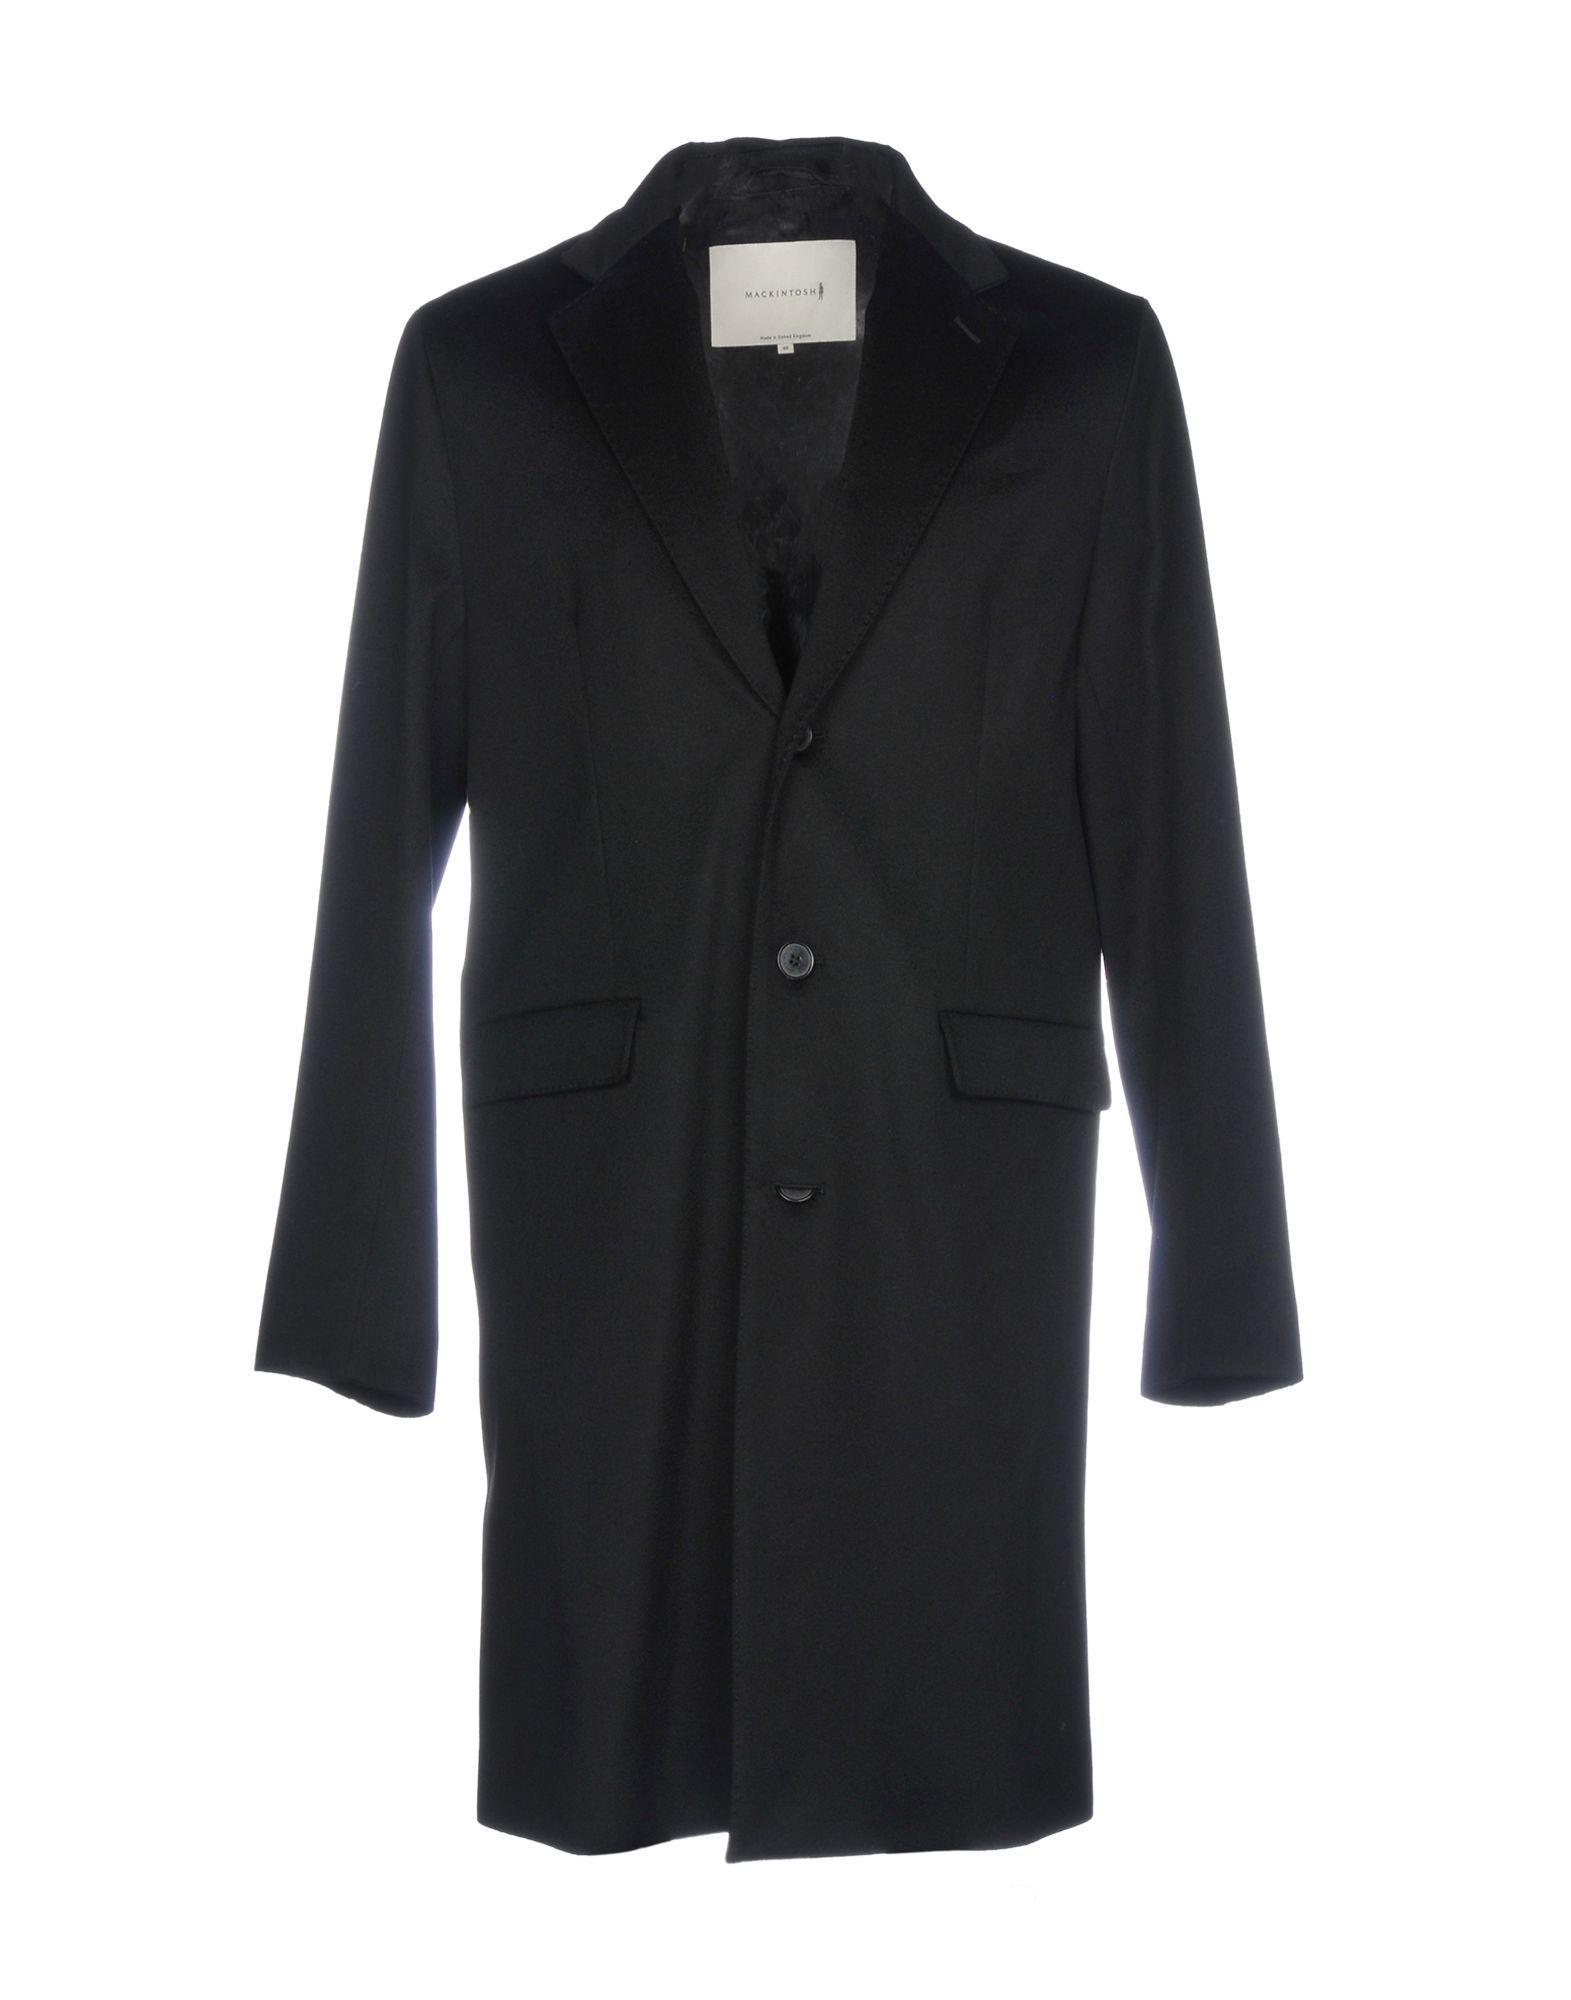 Mackintosh Flannel Coat in Black for Men - Lyst